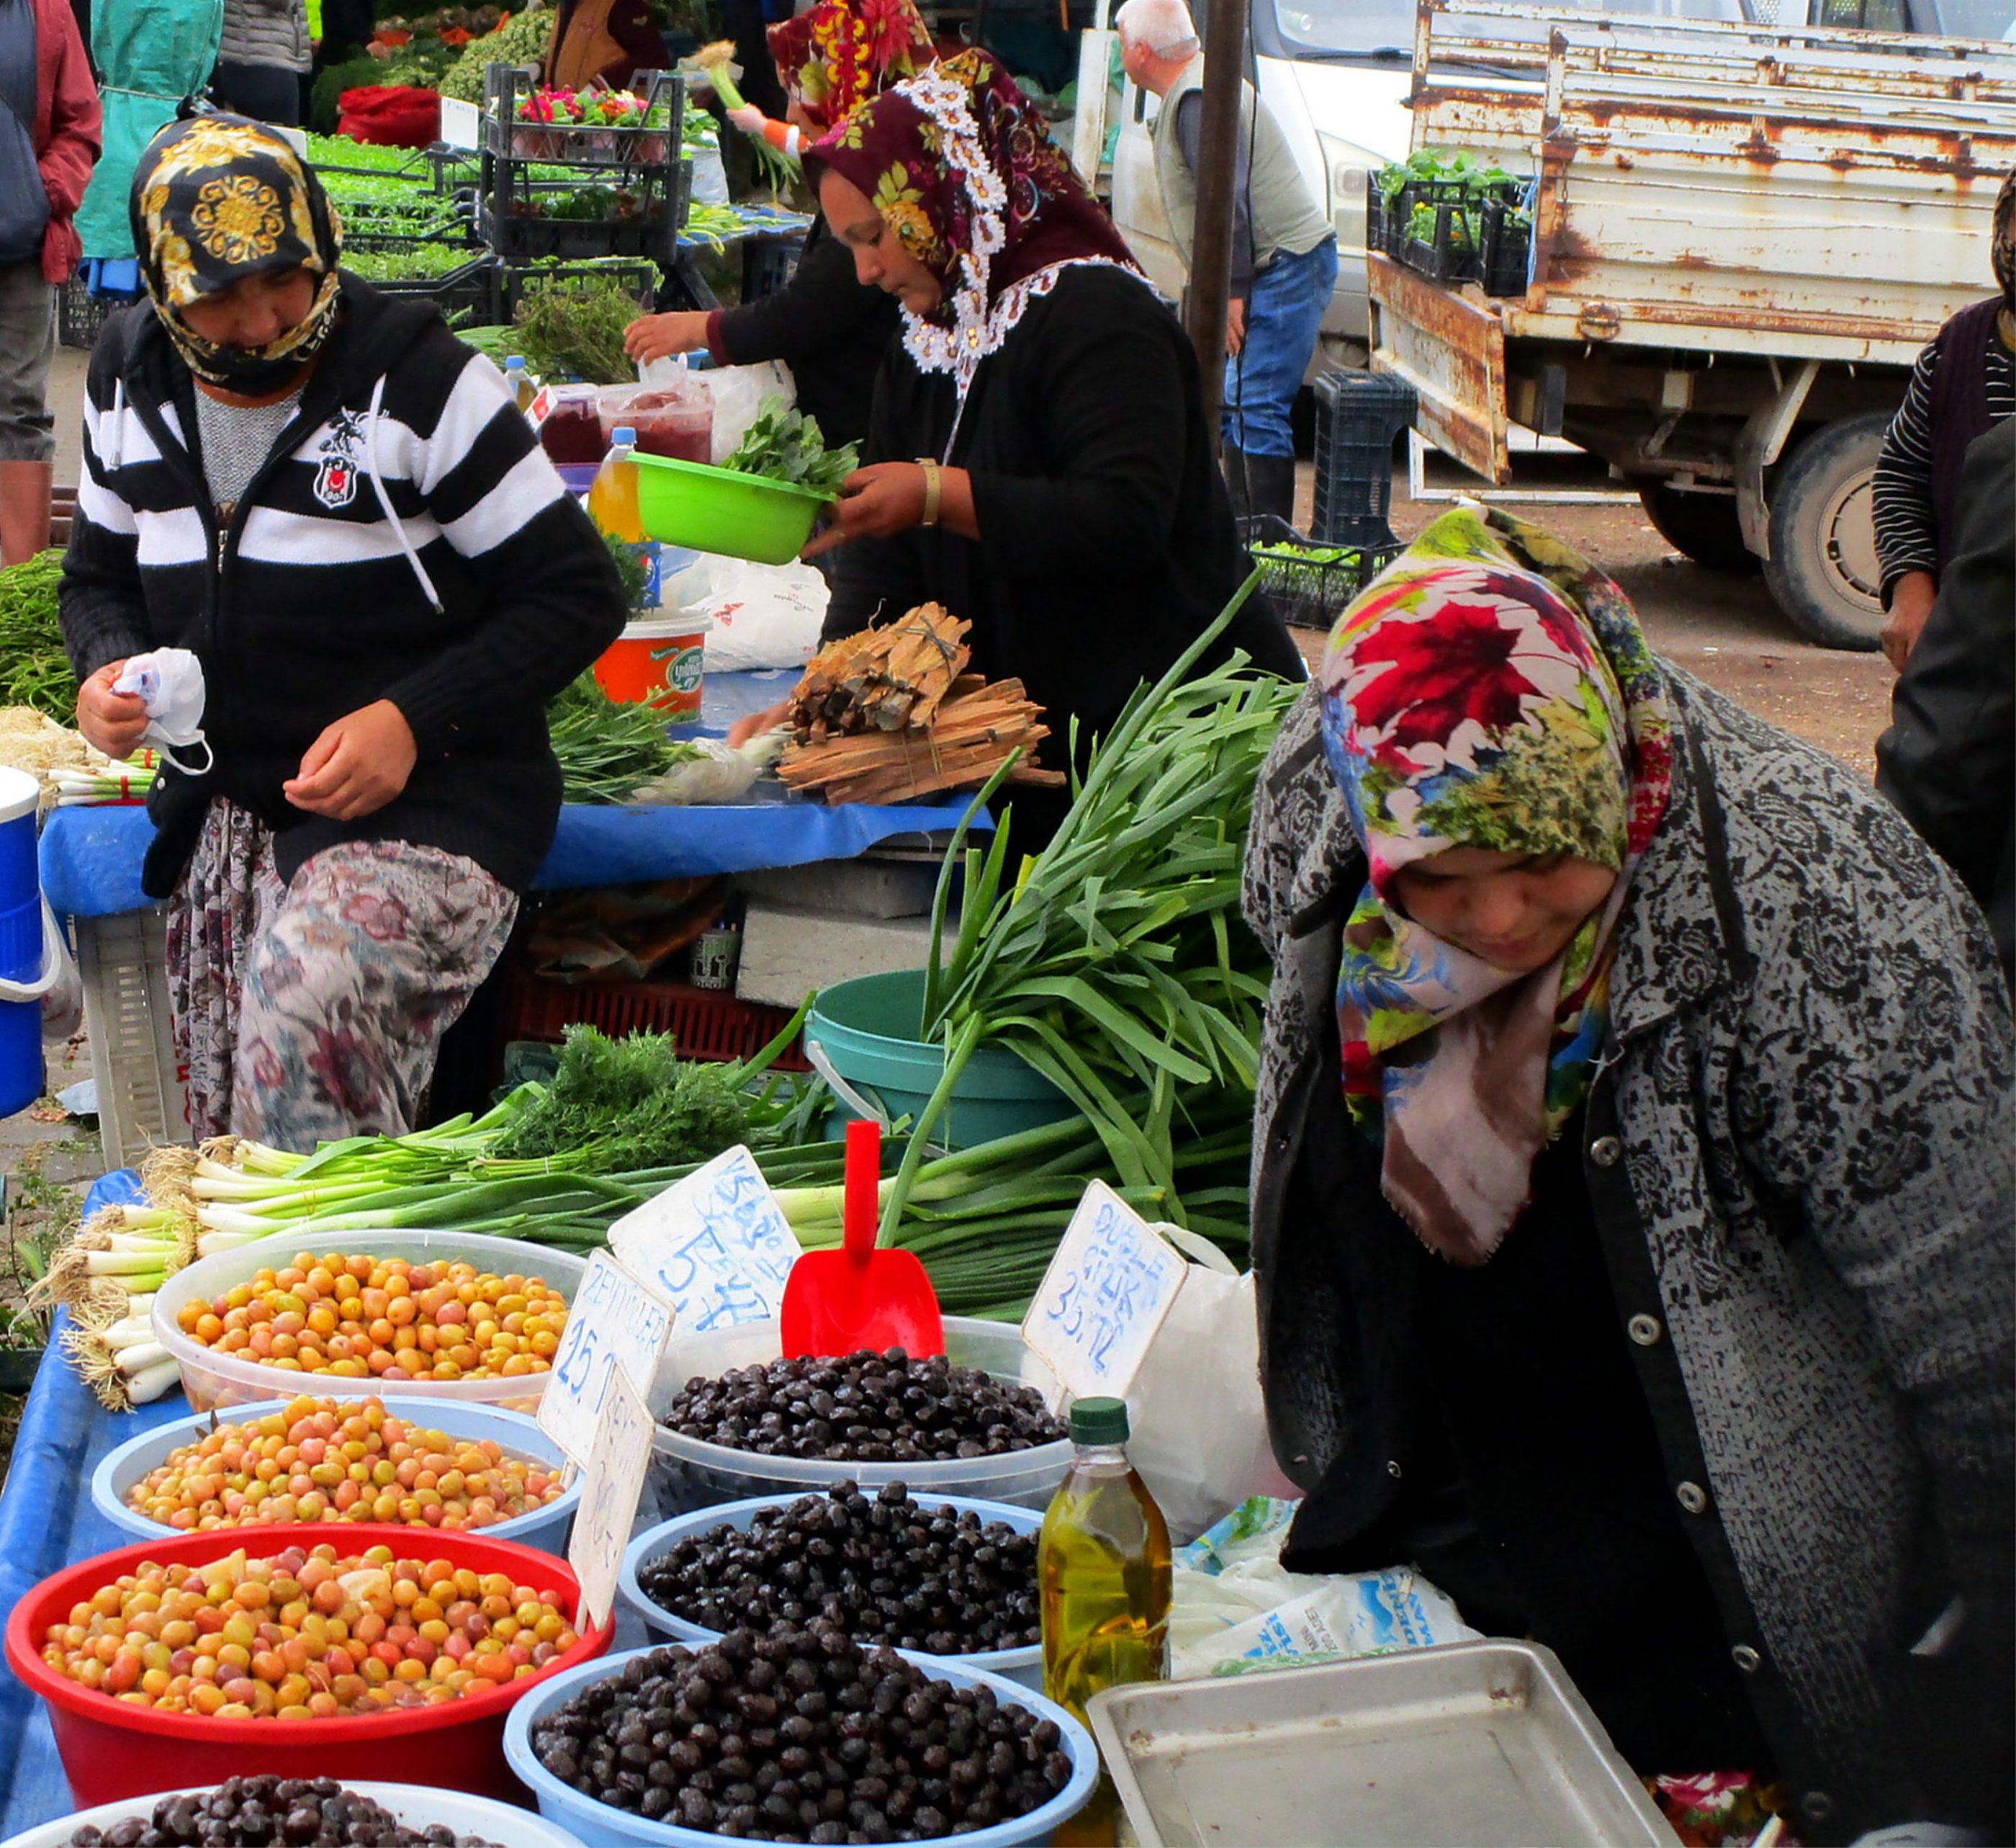 Village women in the market